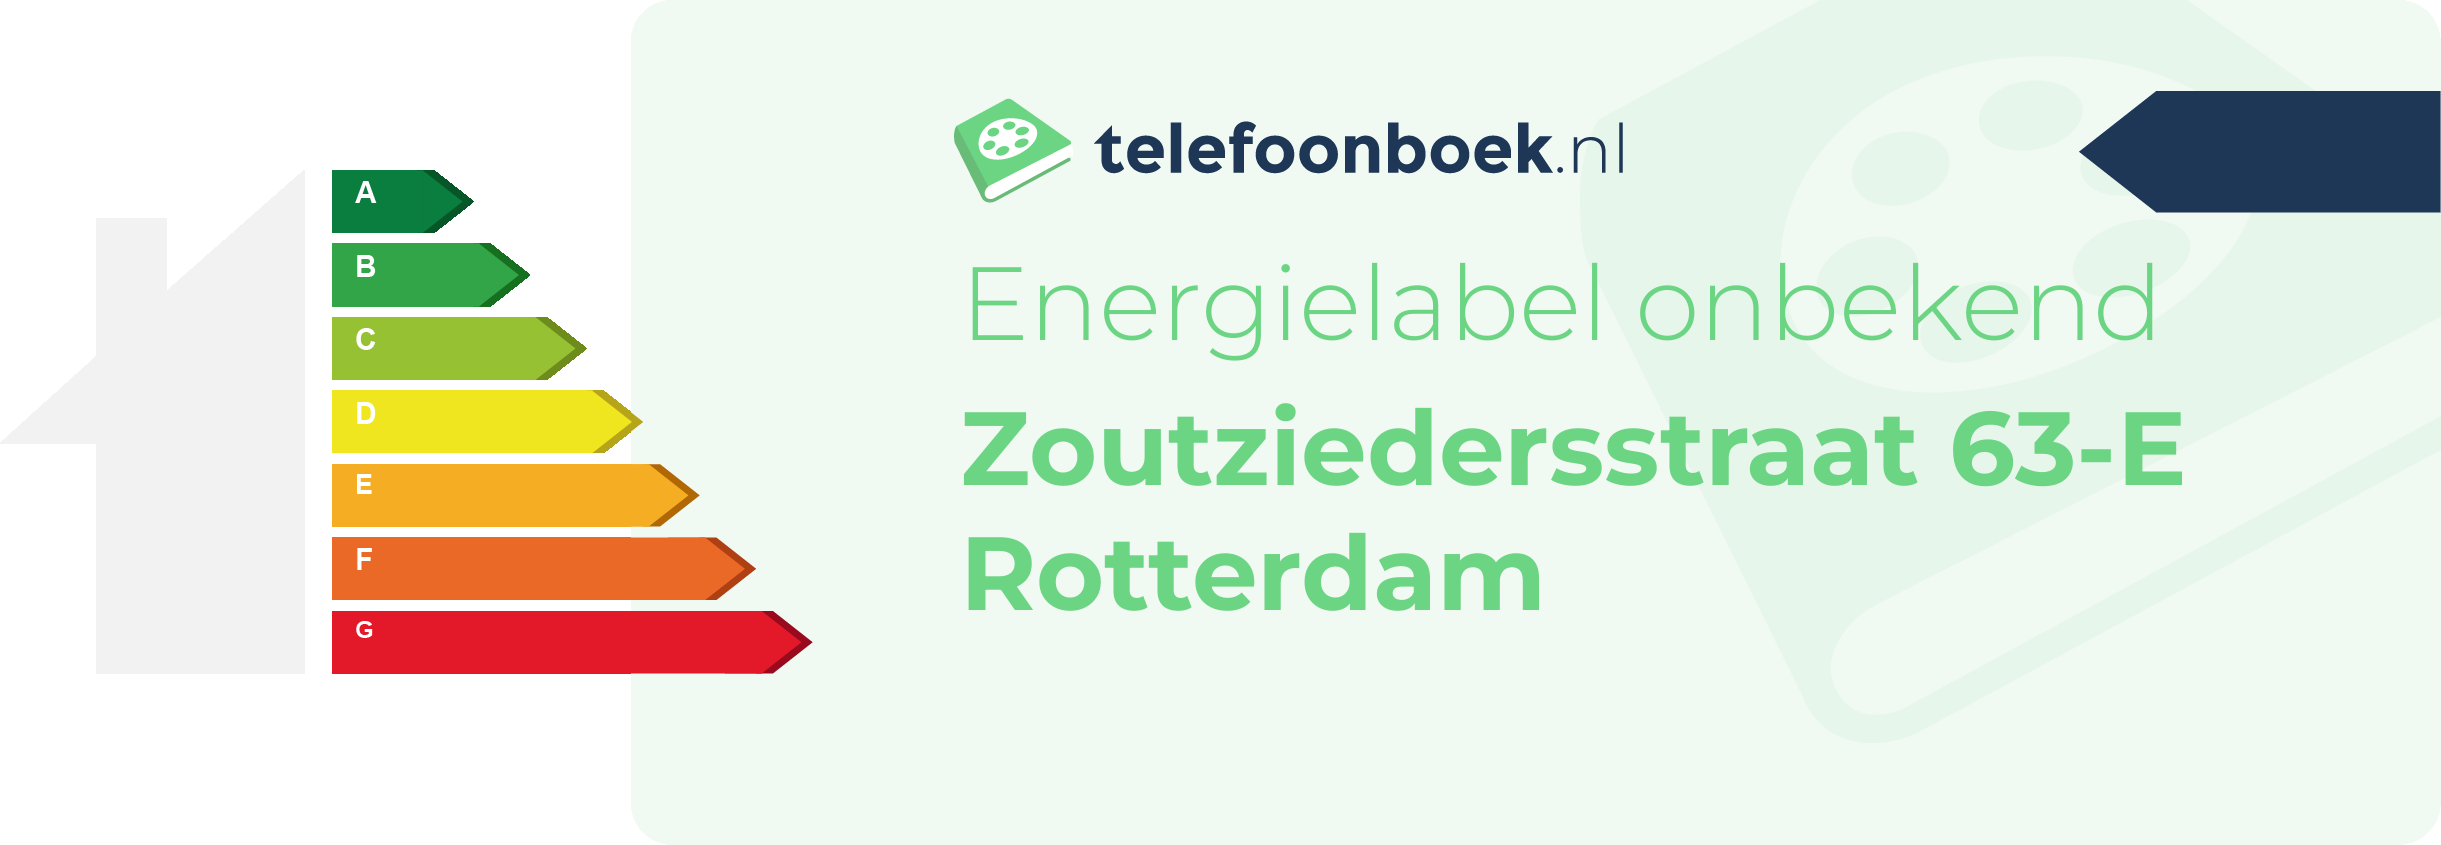 Energielabel Zoutziedersstraat 63-E Rotterdam